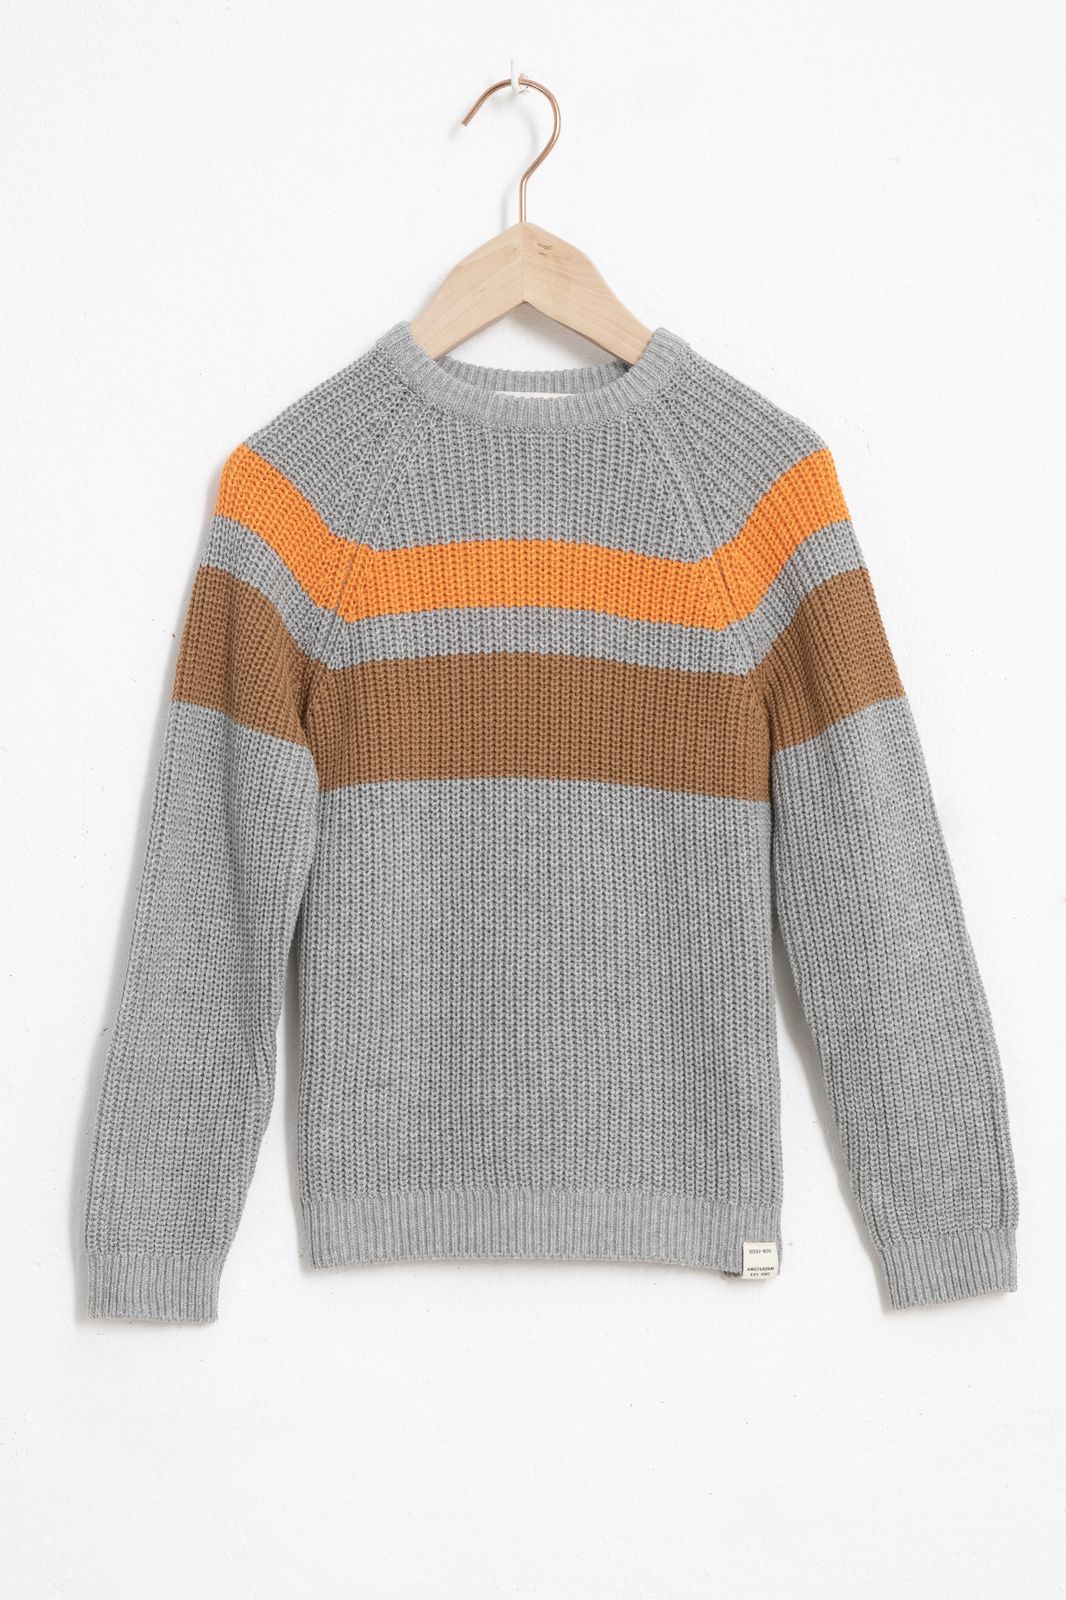 Cardigan Stitch Sweater - grau